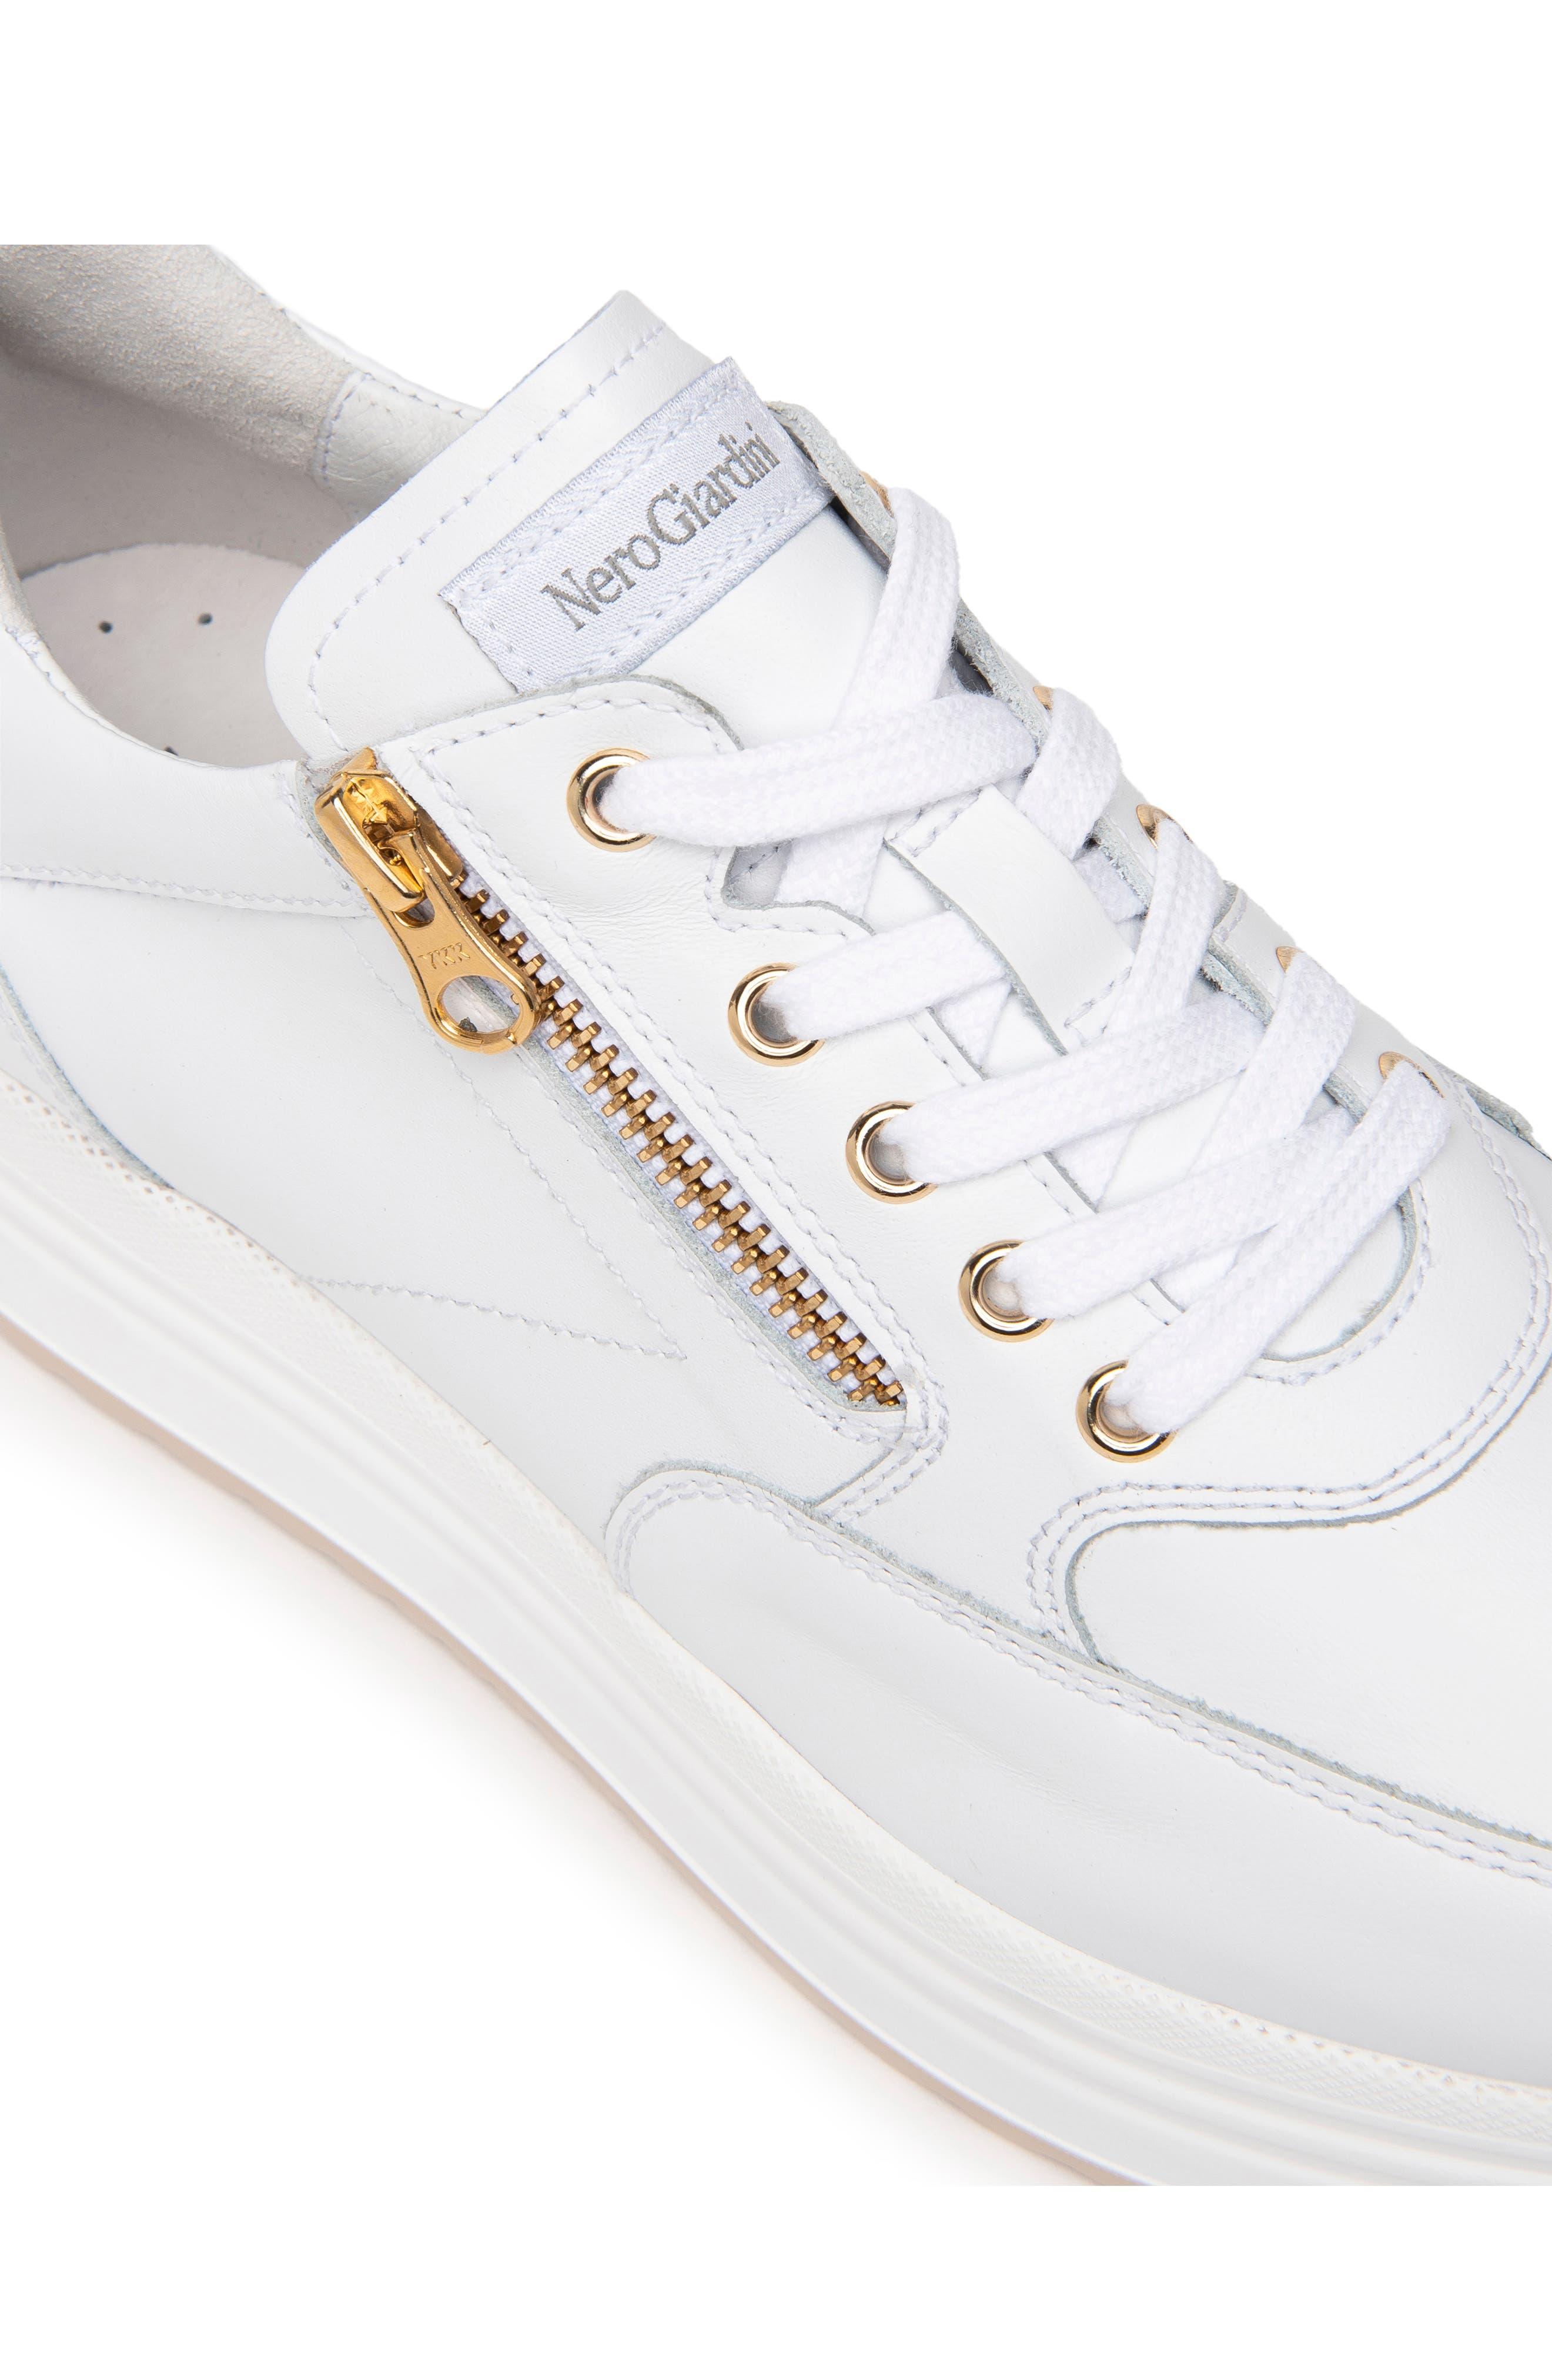 Nero Giardini Bow Platform Sneaker in White | Lyst